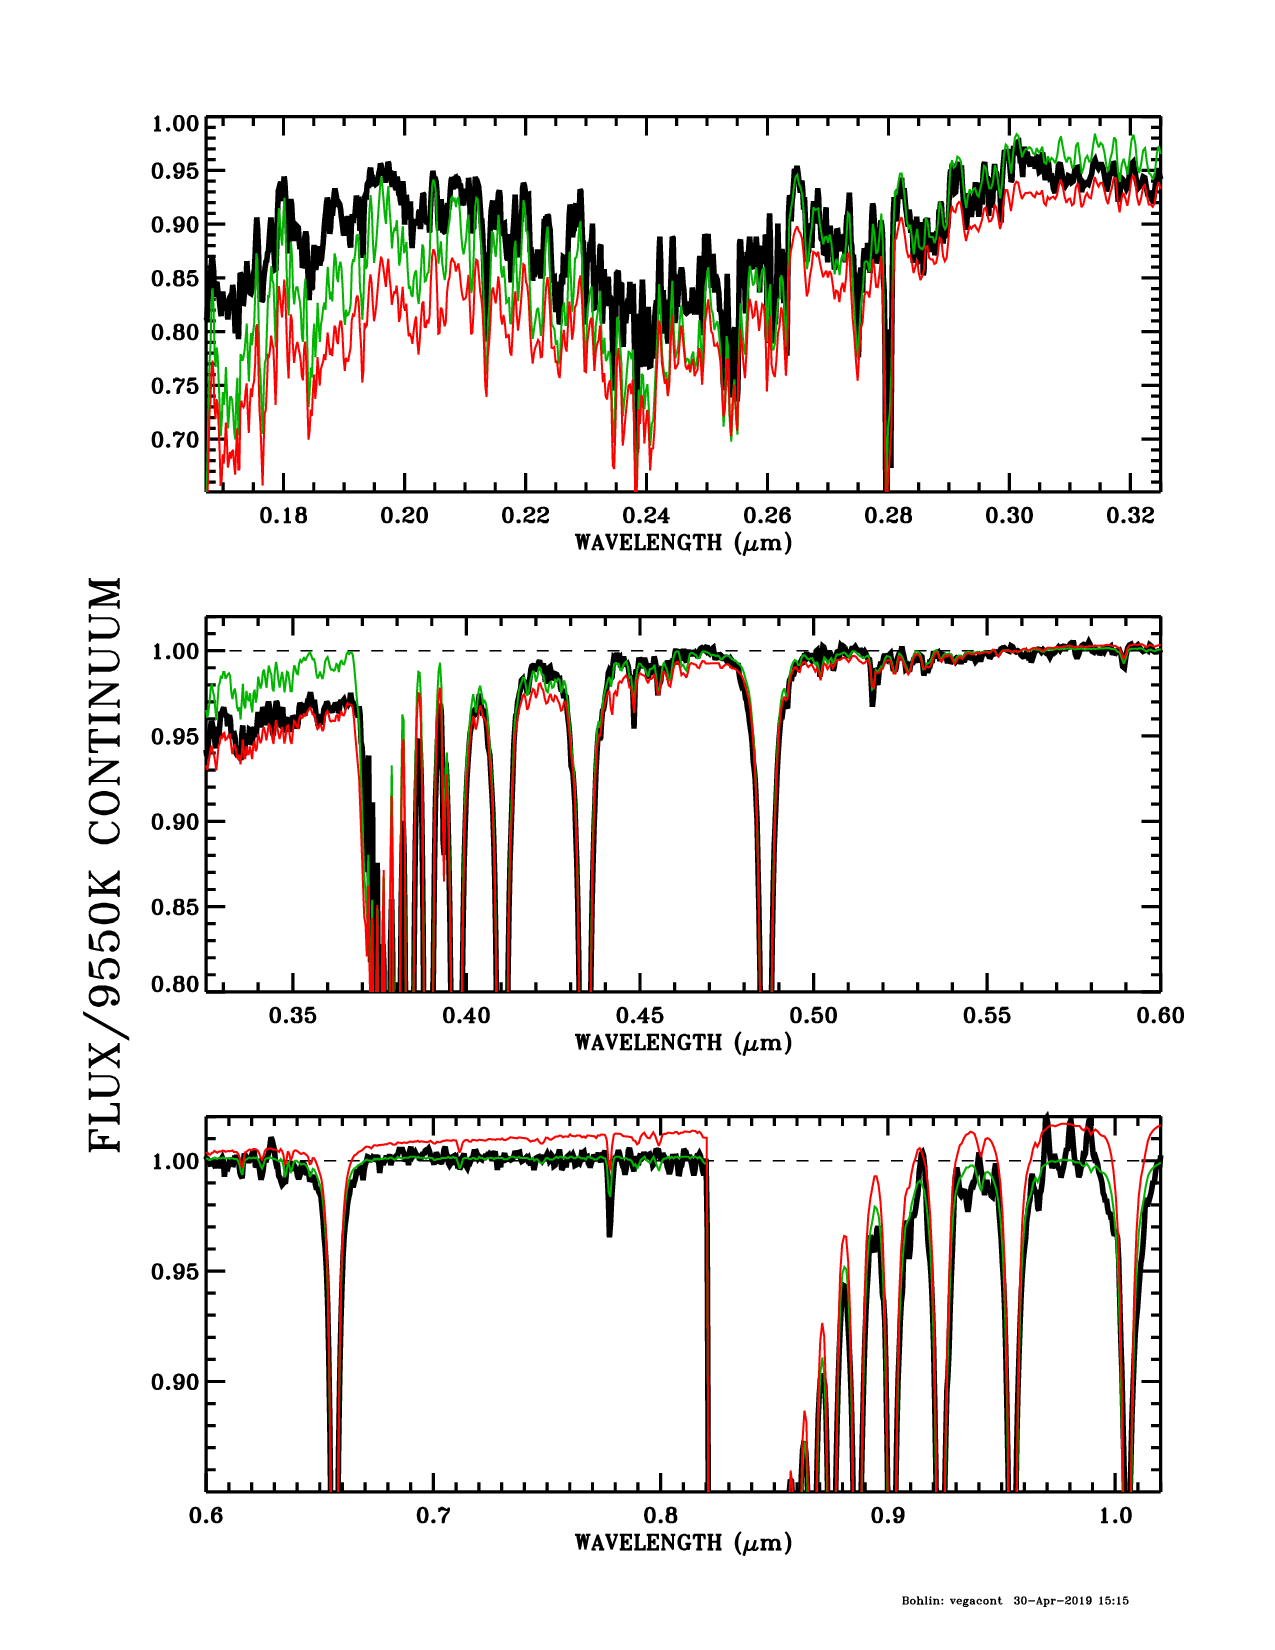 Vega STIS spectrum relative to models